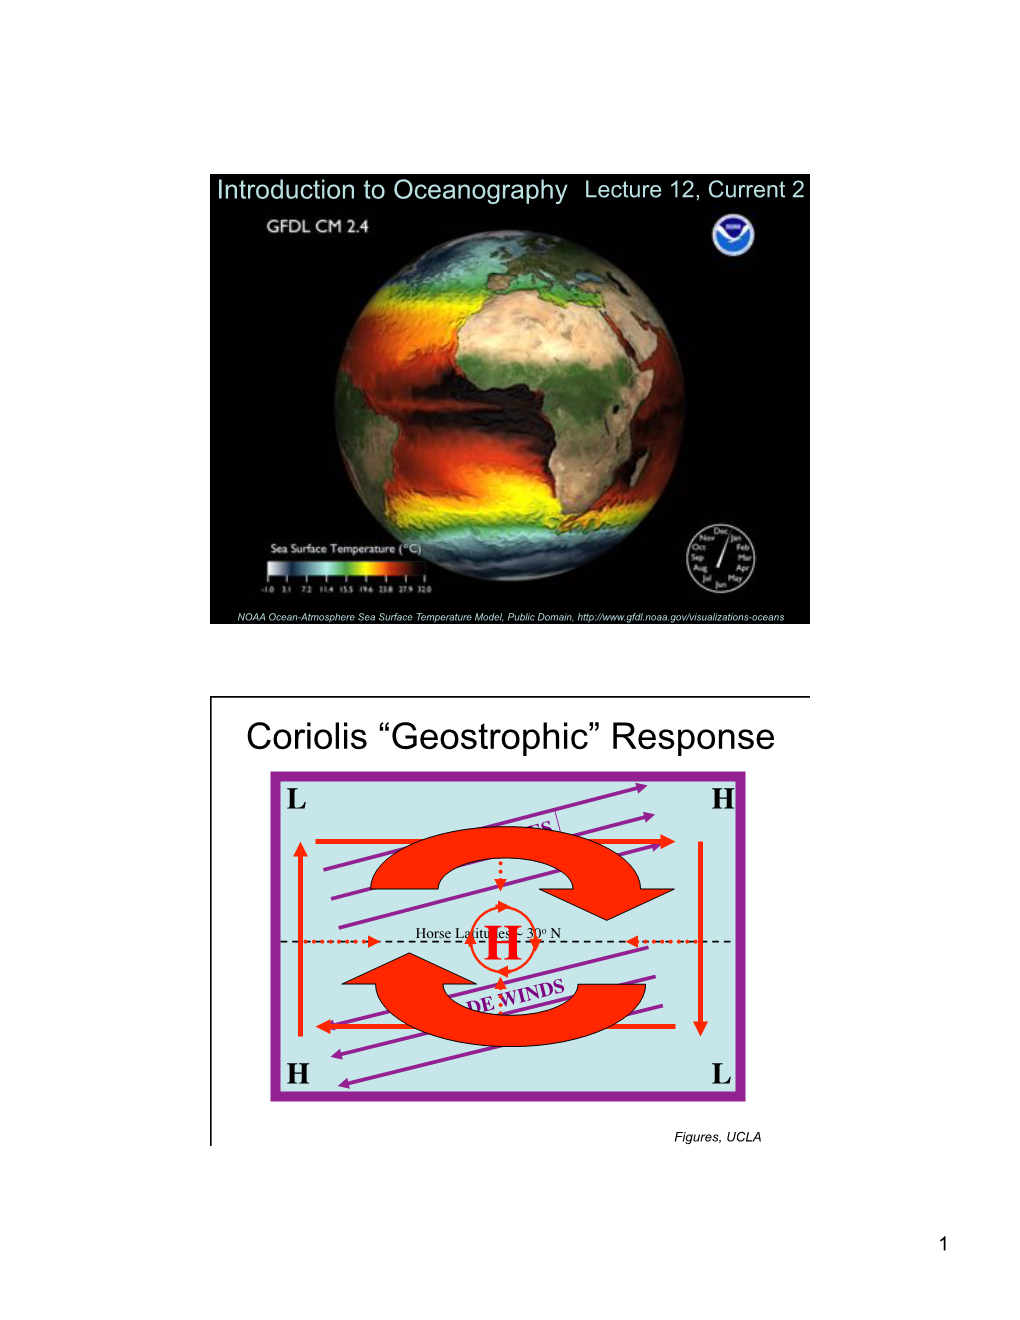 Coriolis “Geostrophic” Response L H